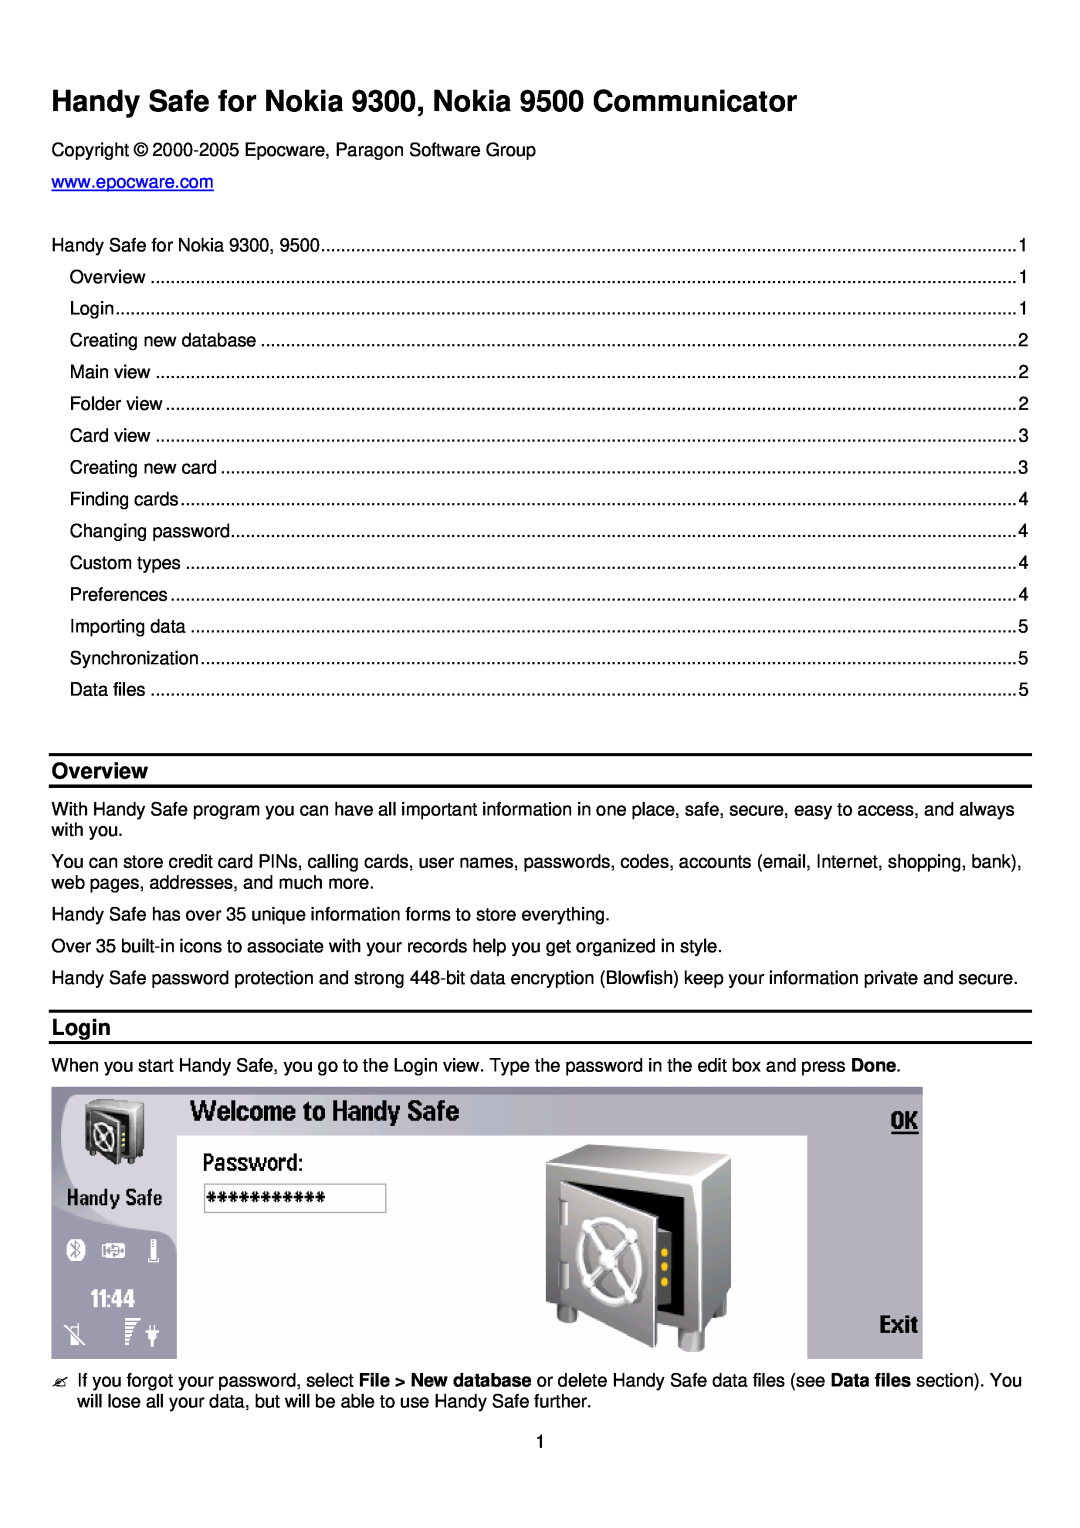 Nokia manual Nokia 9500 Communicator User Guide, Issue 